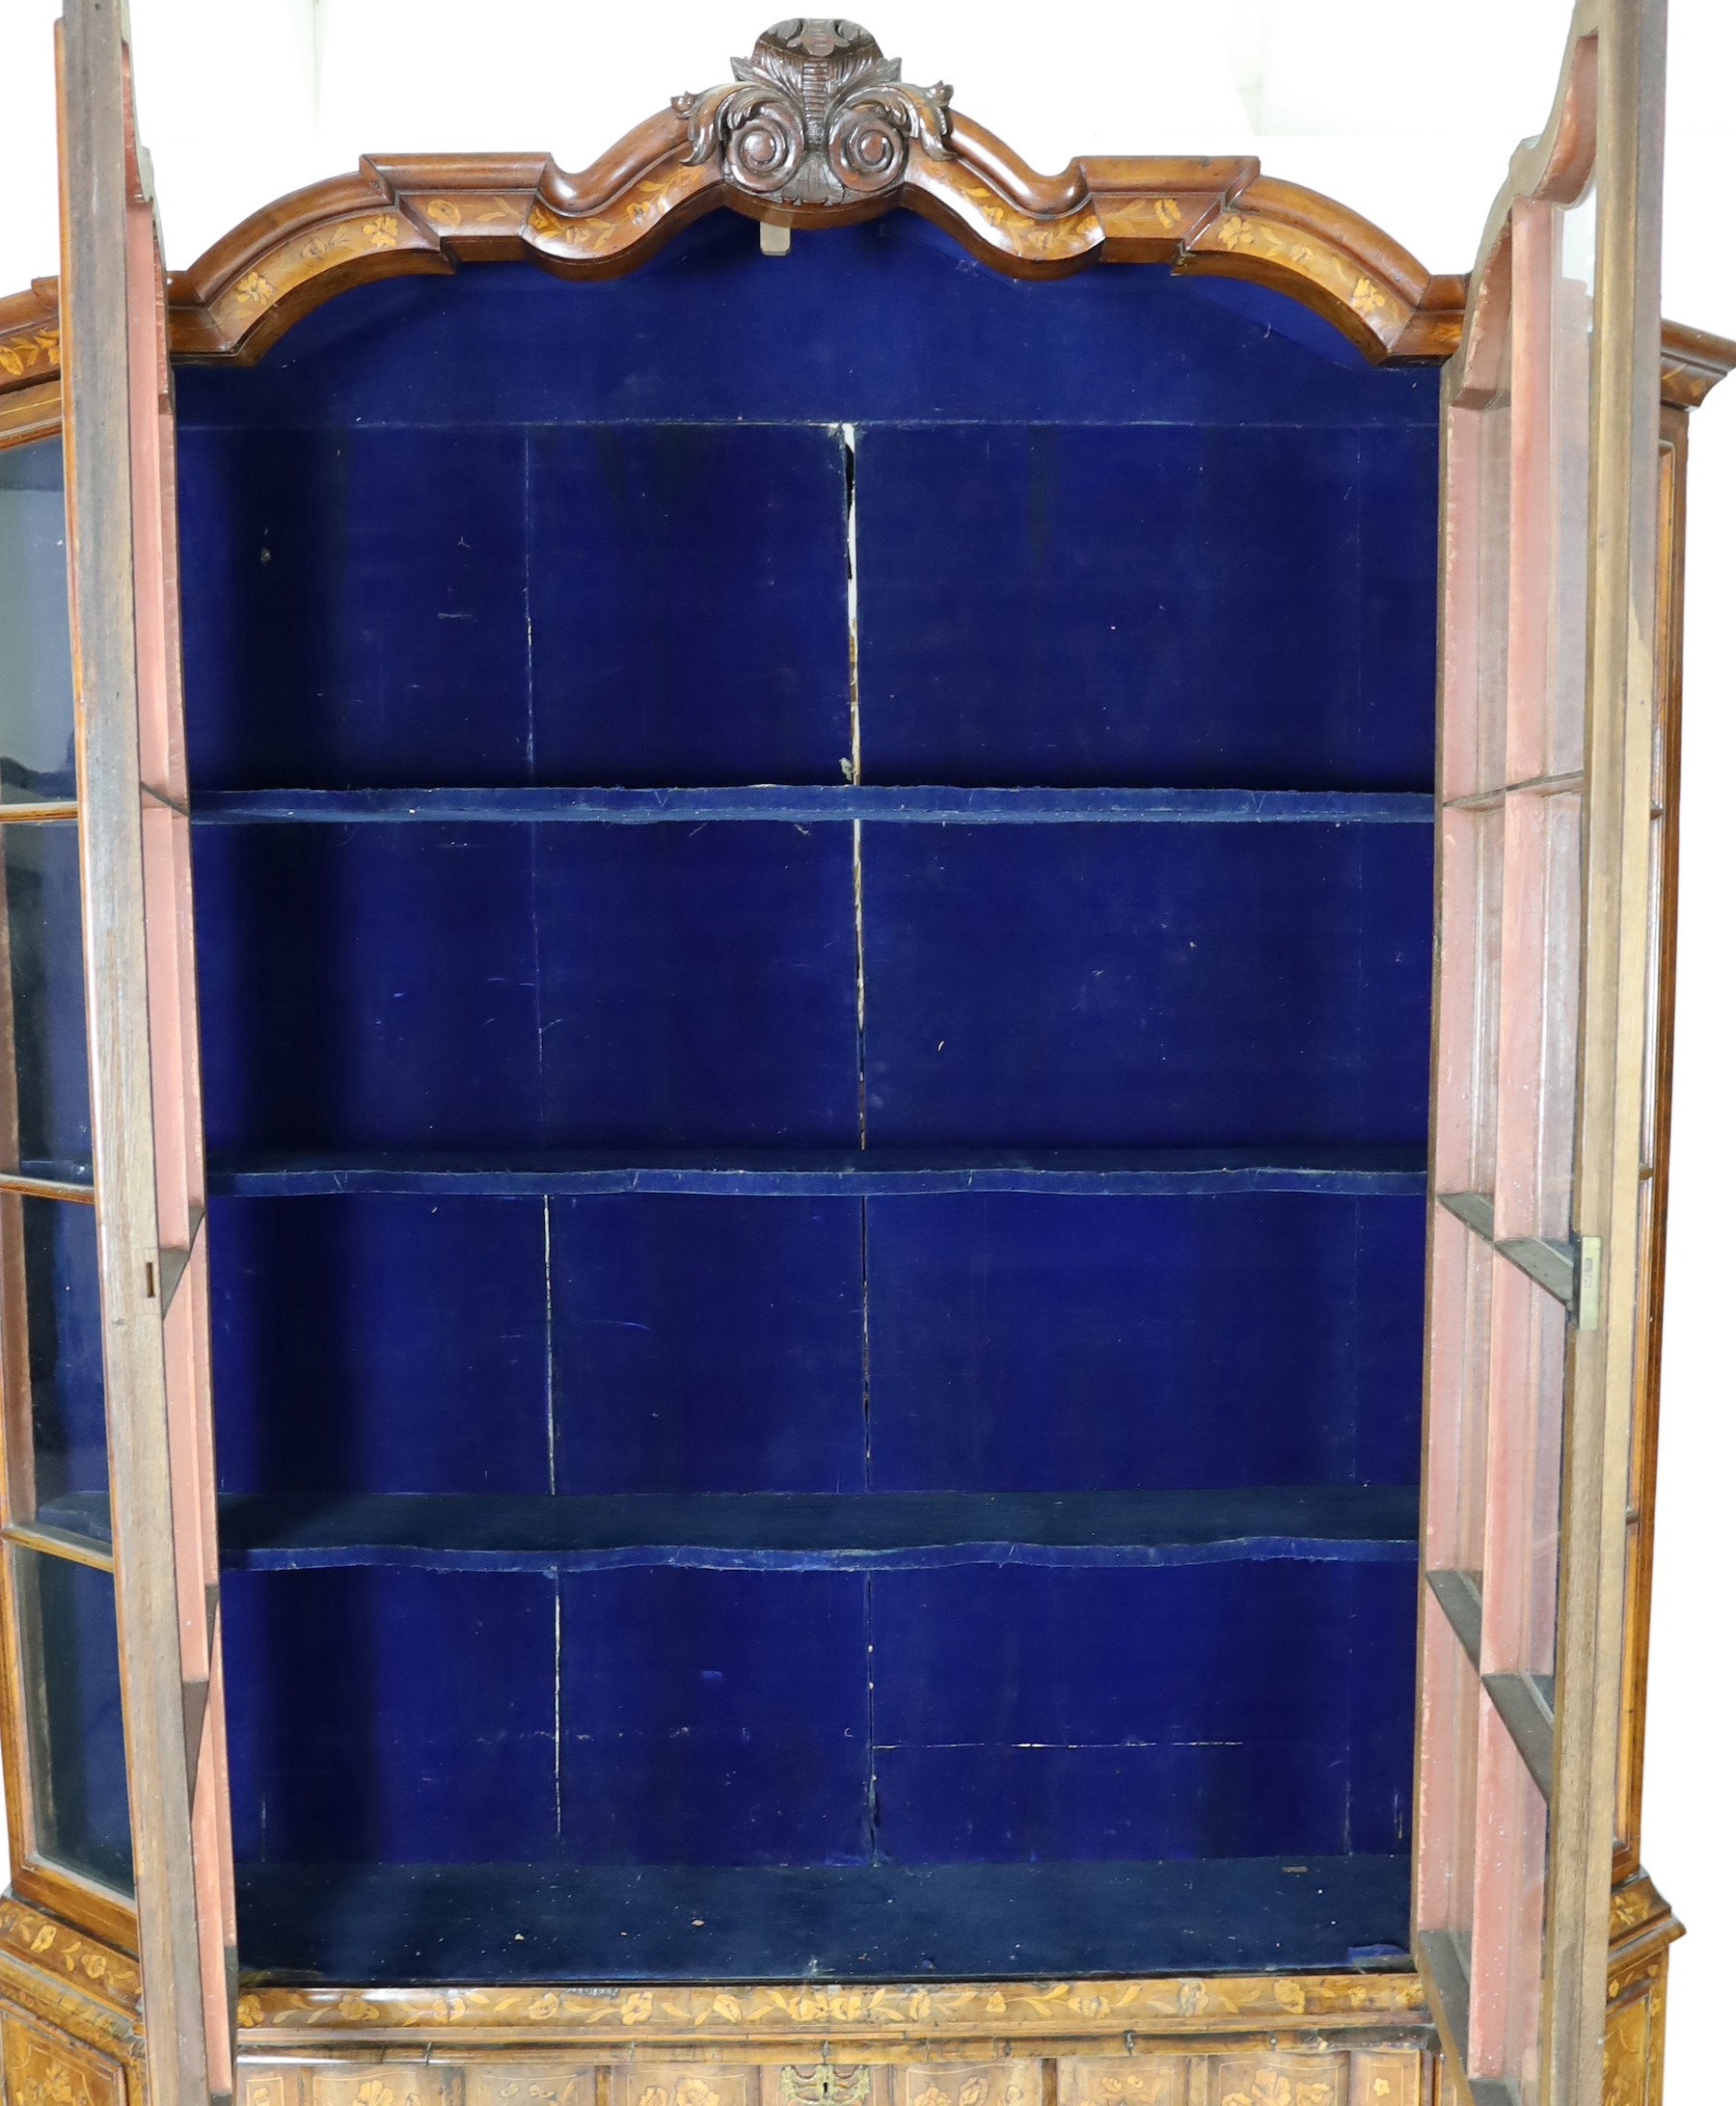 A late 18th century Dutch marquetry inlaid walnut serpentine display cabinet, width 186cm depth 36cm height 260cm